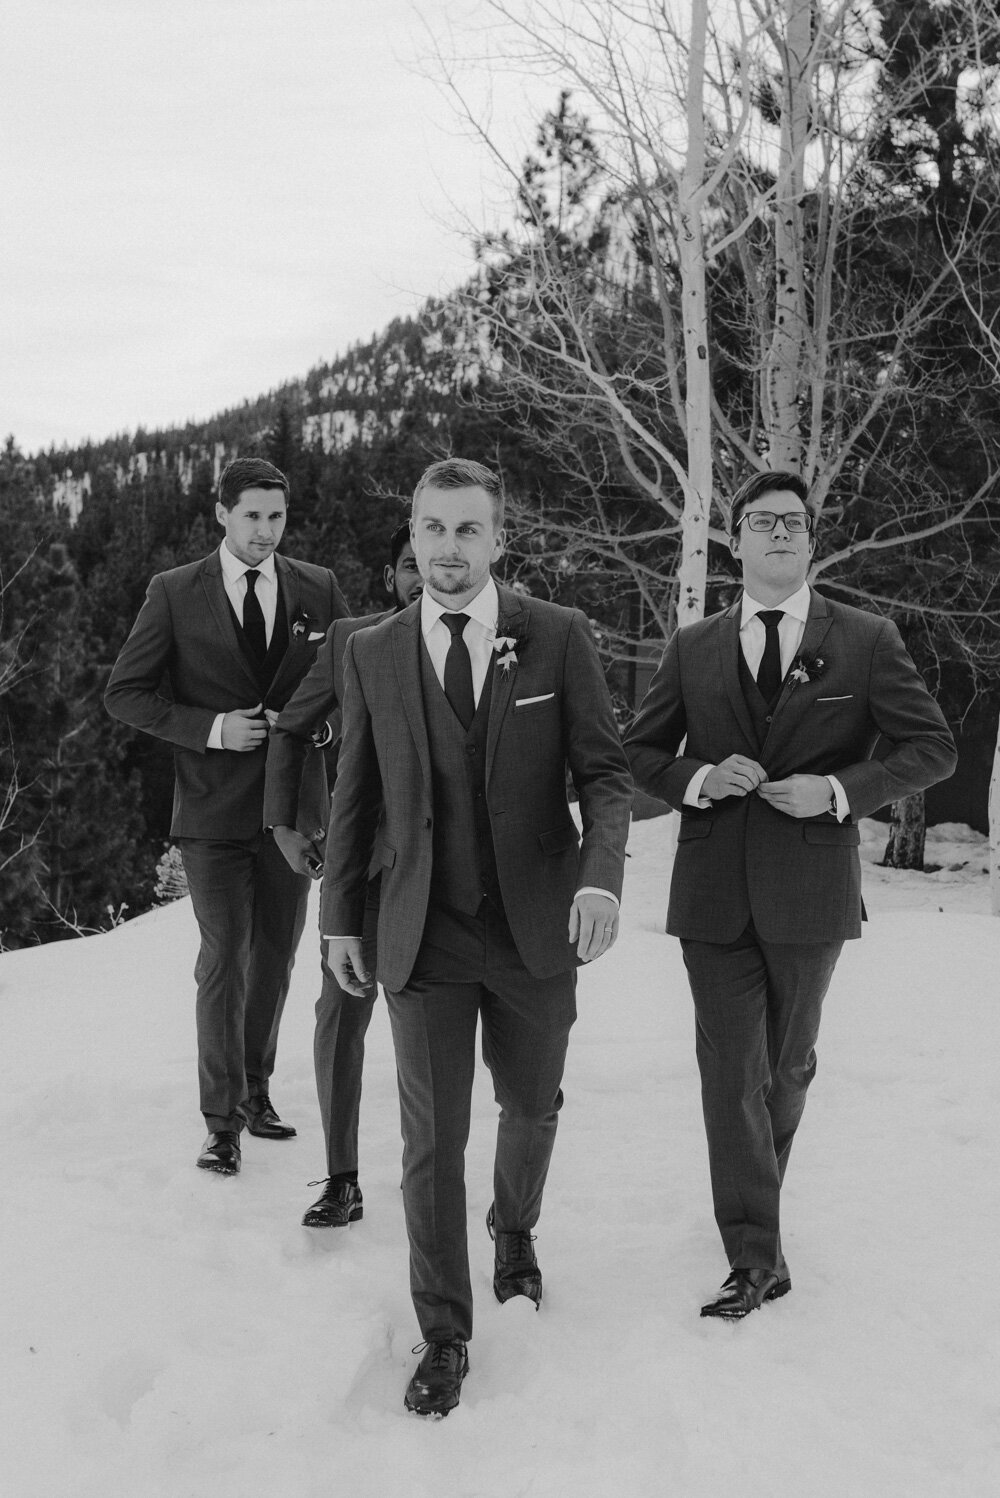 Tannenbaum Winter Wedding, photo of groom and his buddies